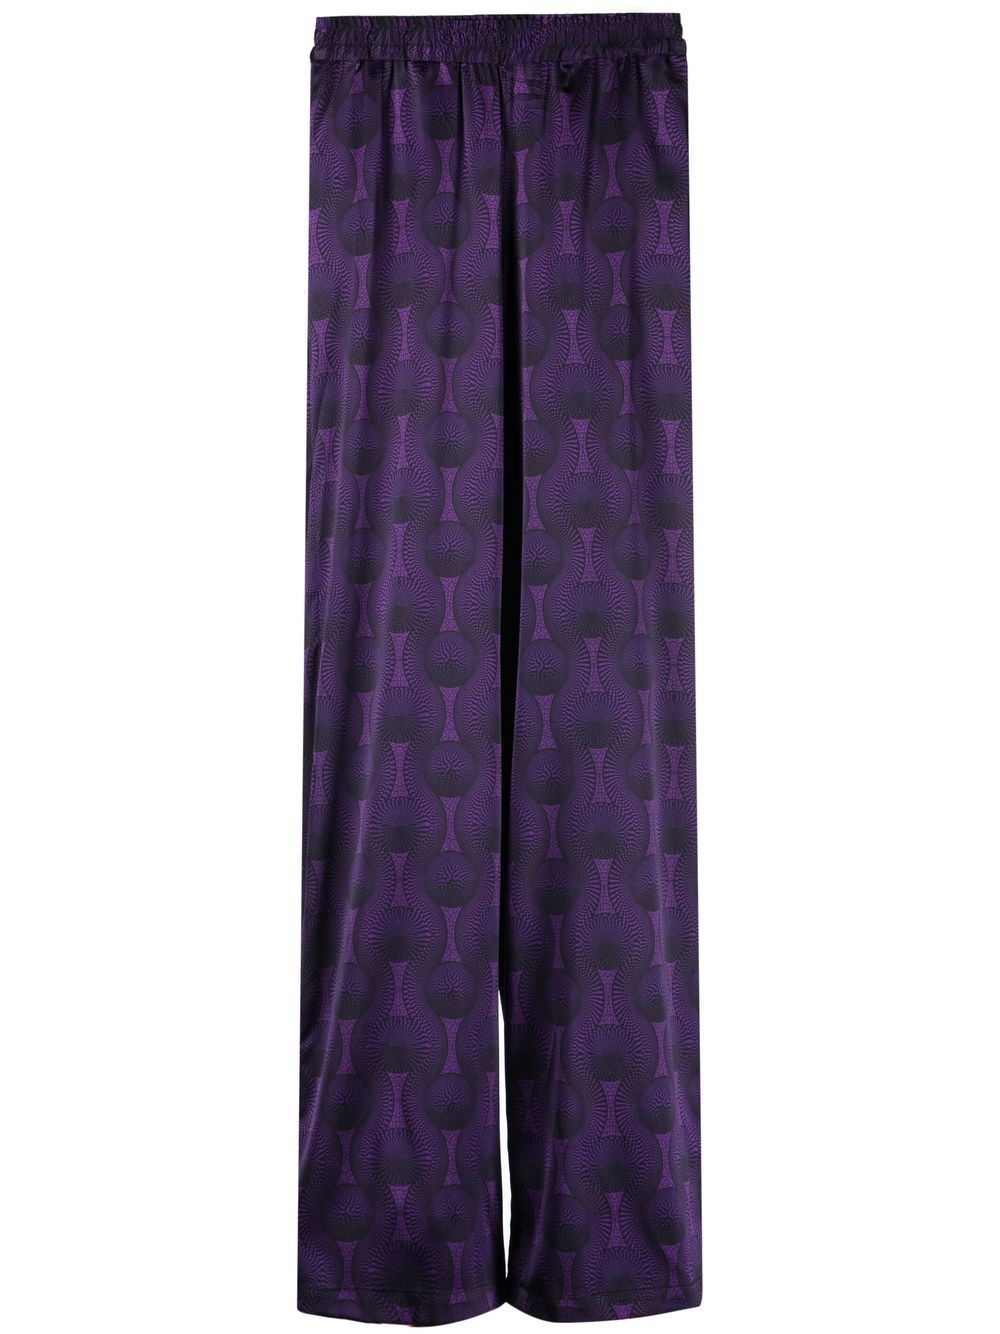 Image 1 of OZWALD BOATENG geometric-print silk trousers